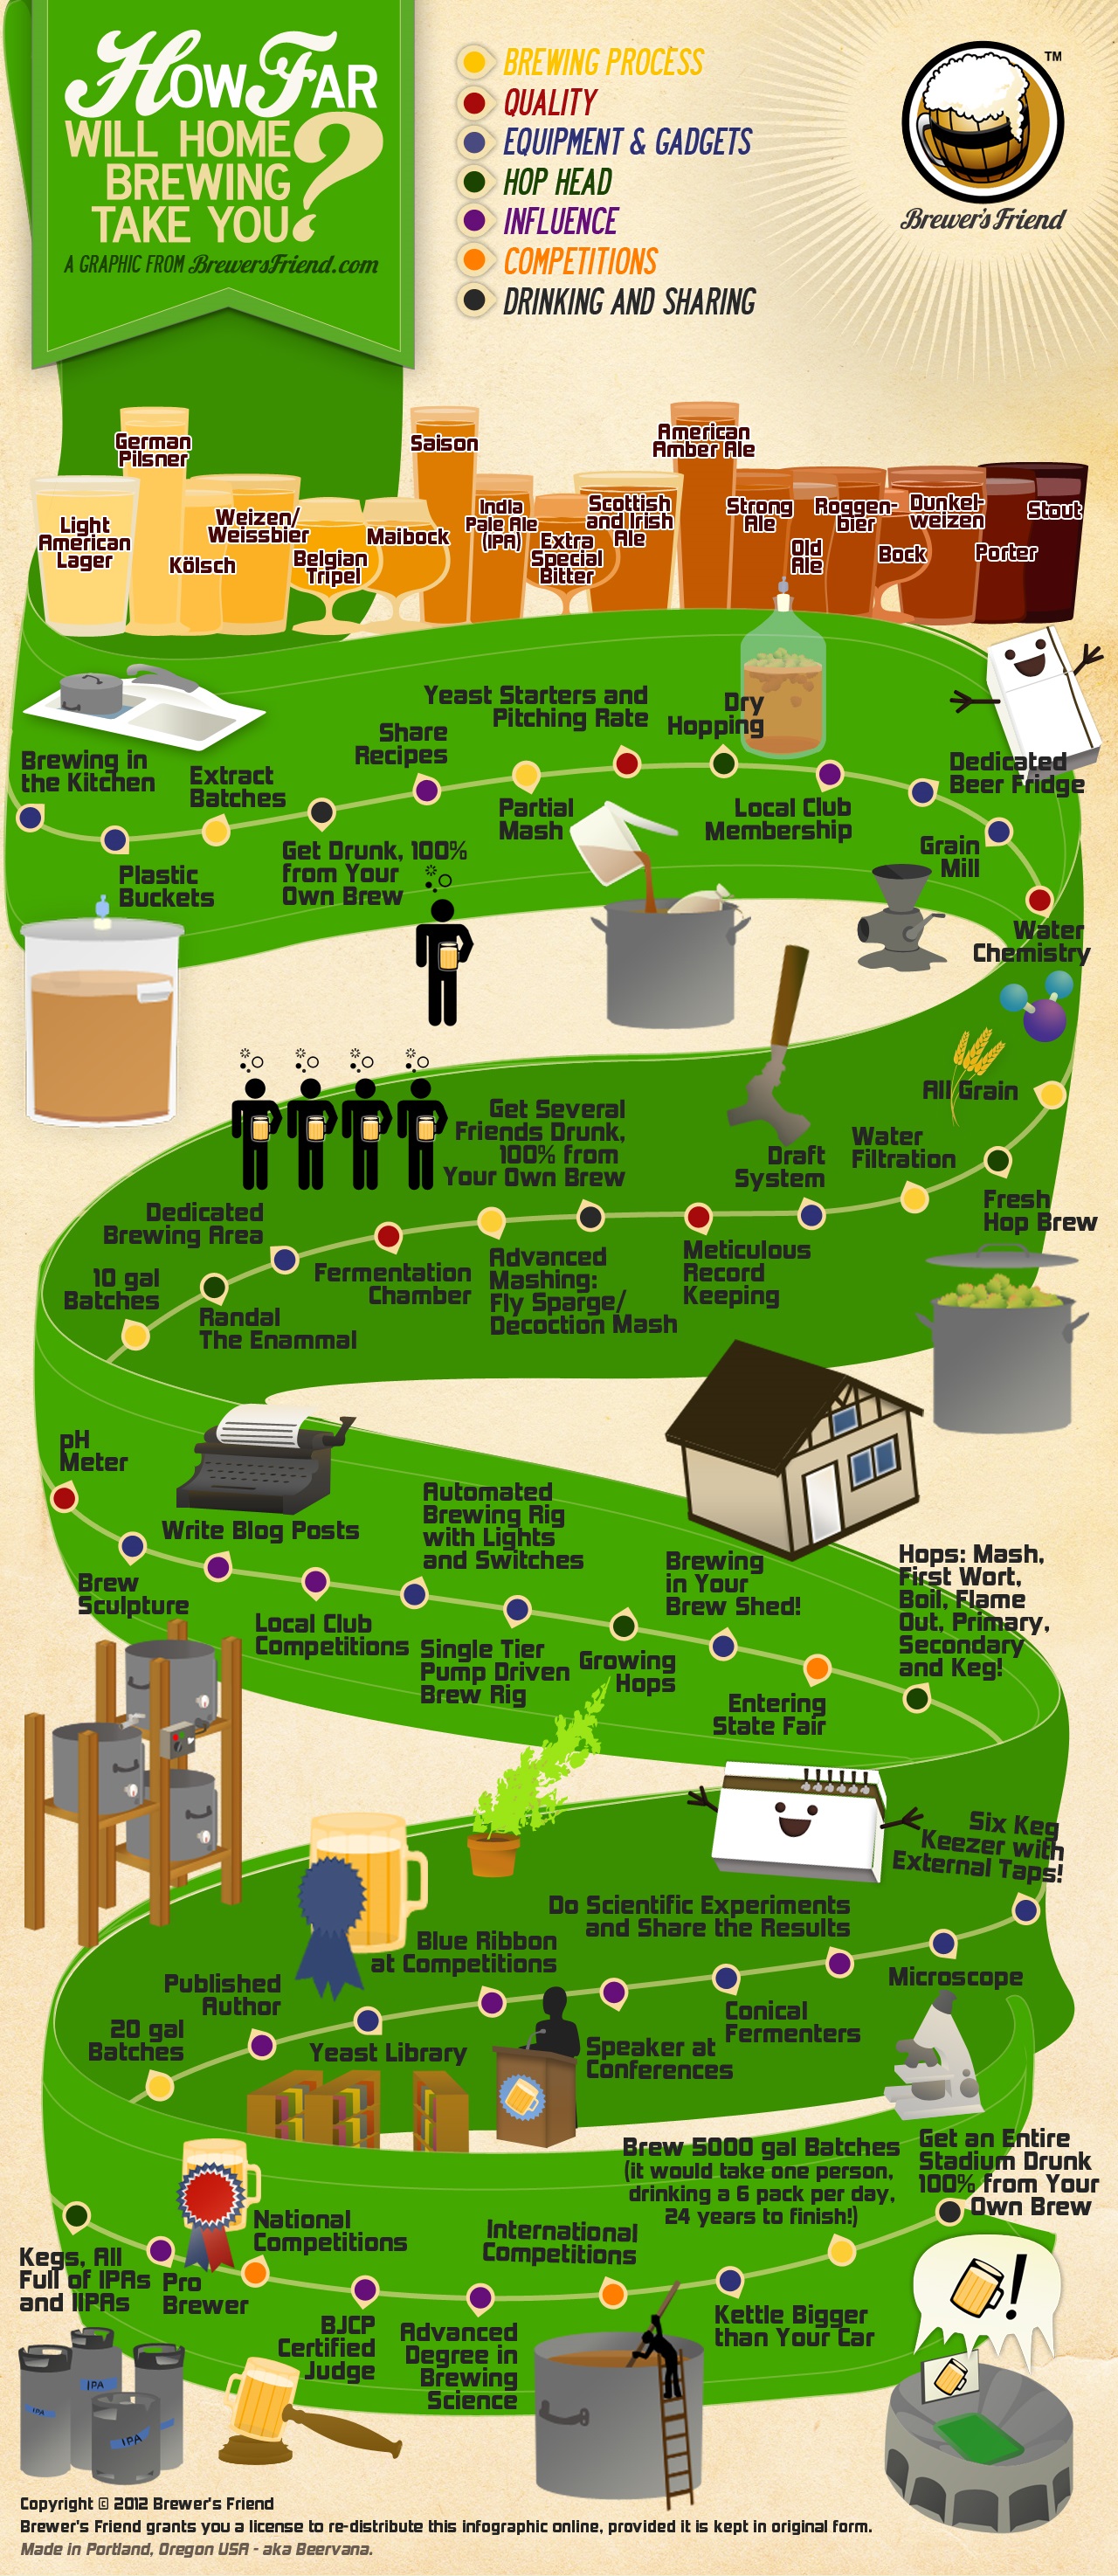 brewersfriend_infographic_full.jpg